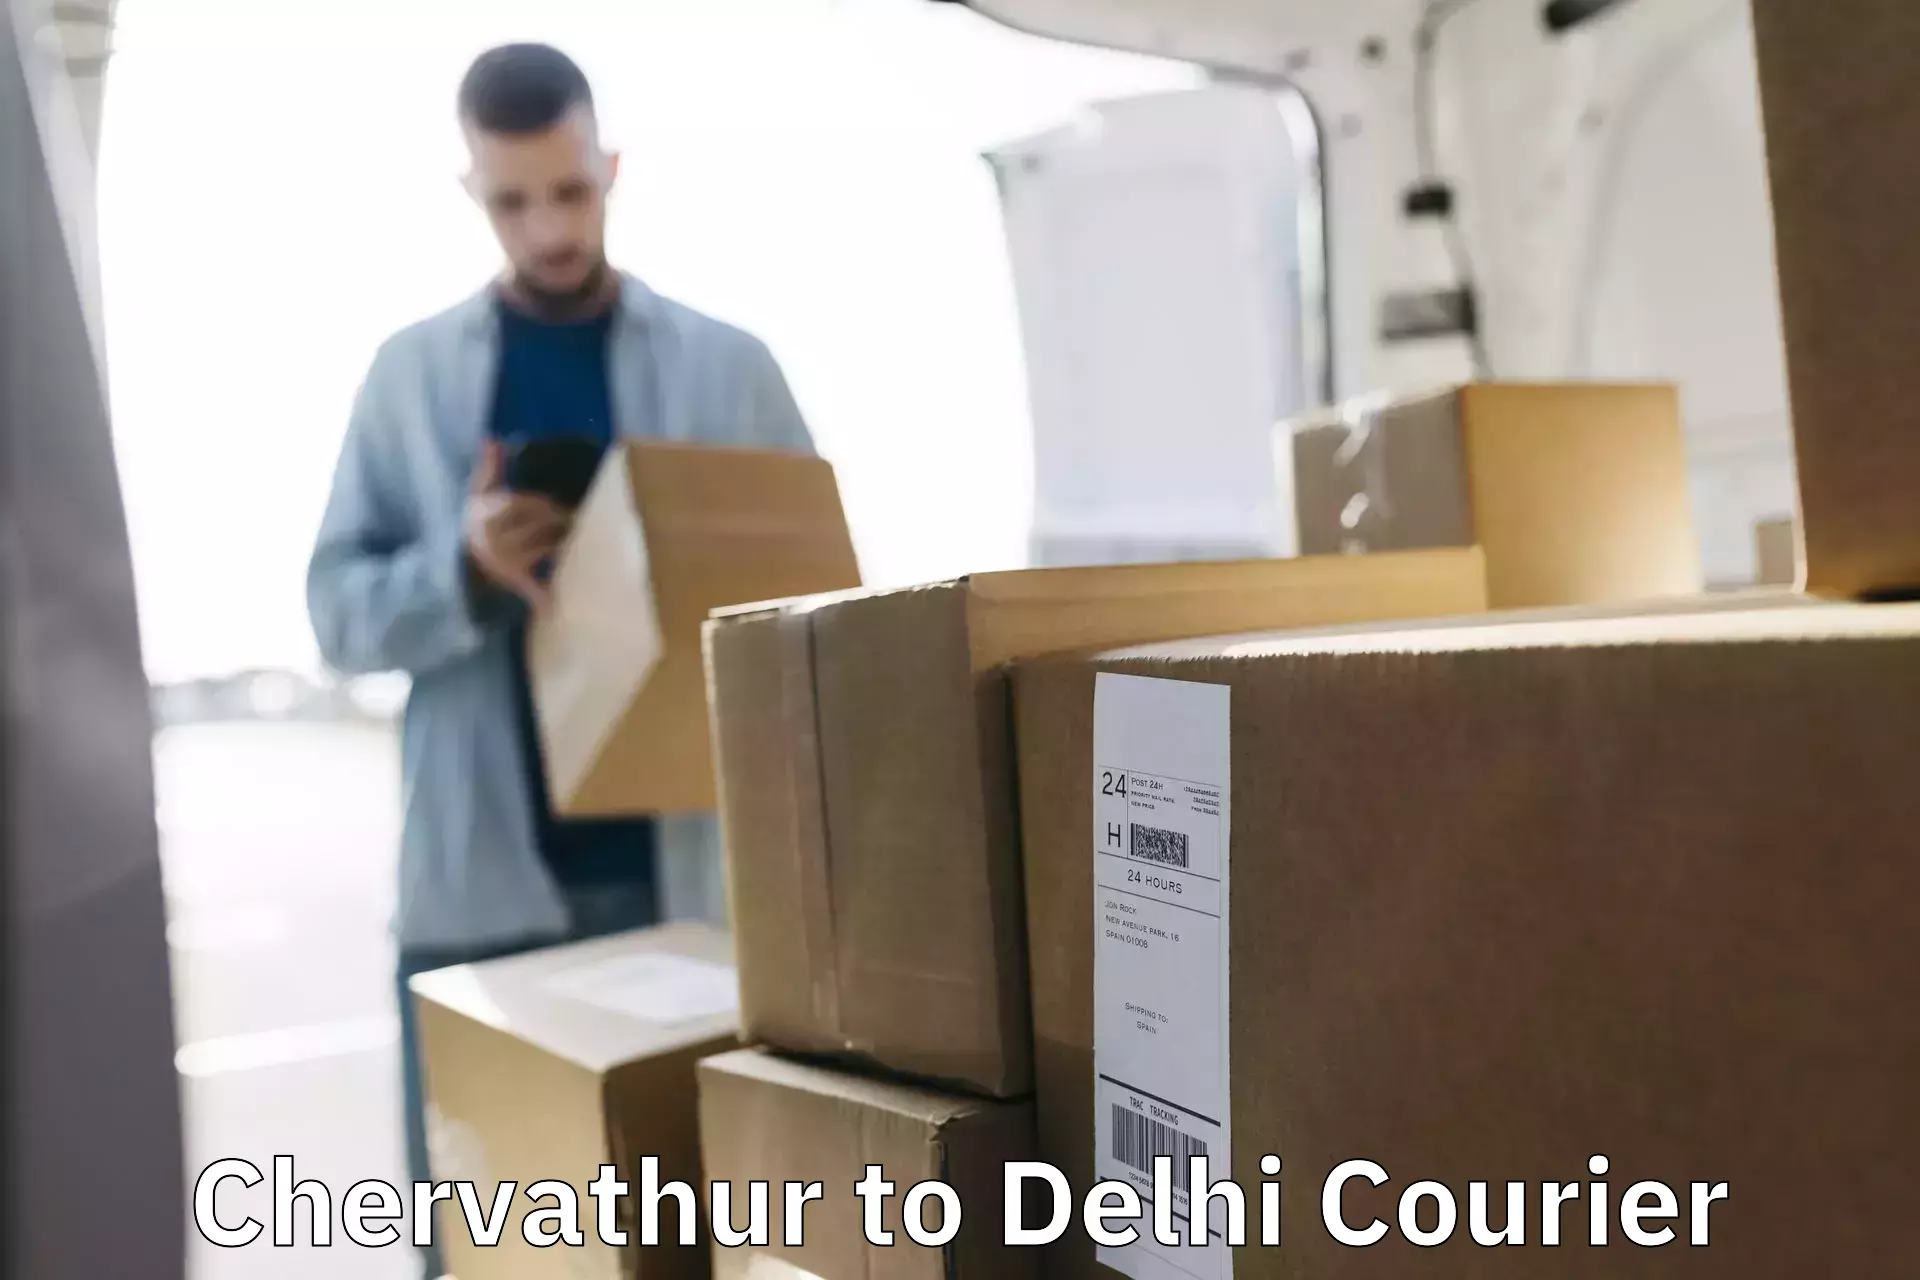 Lightweight parcel options Chervathur to Jawaharlal Nehru University New Delhi